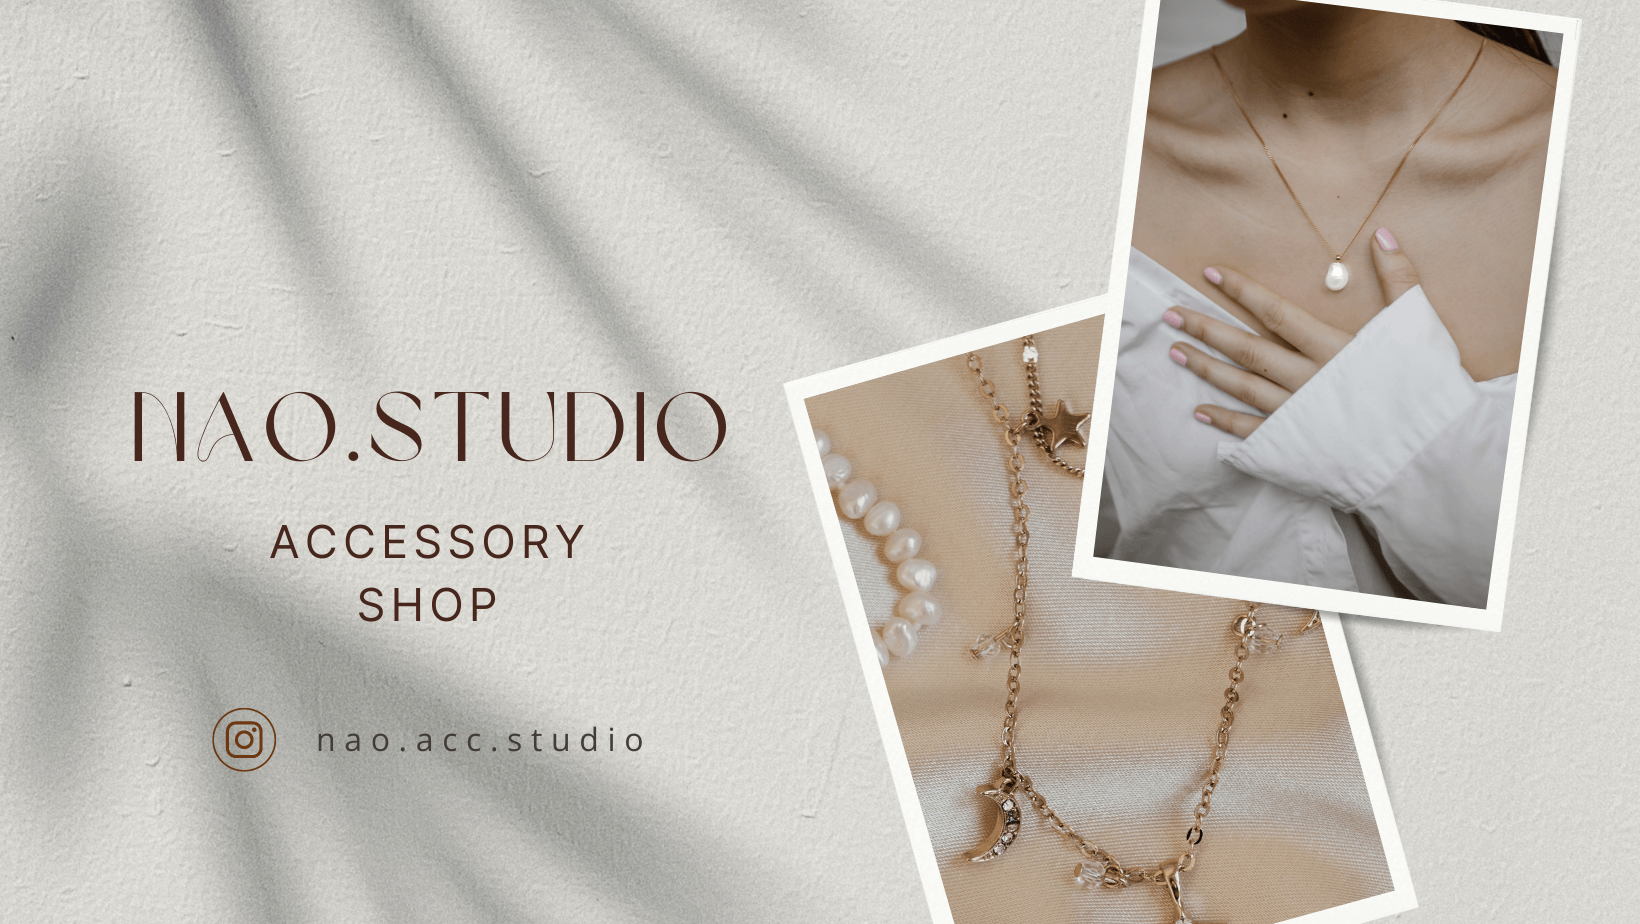 nao_studio accessory shop